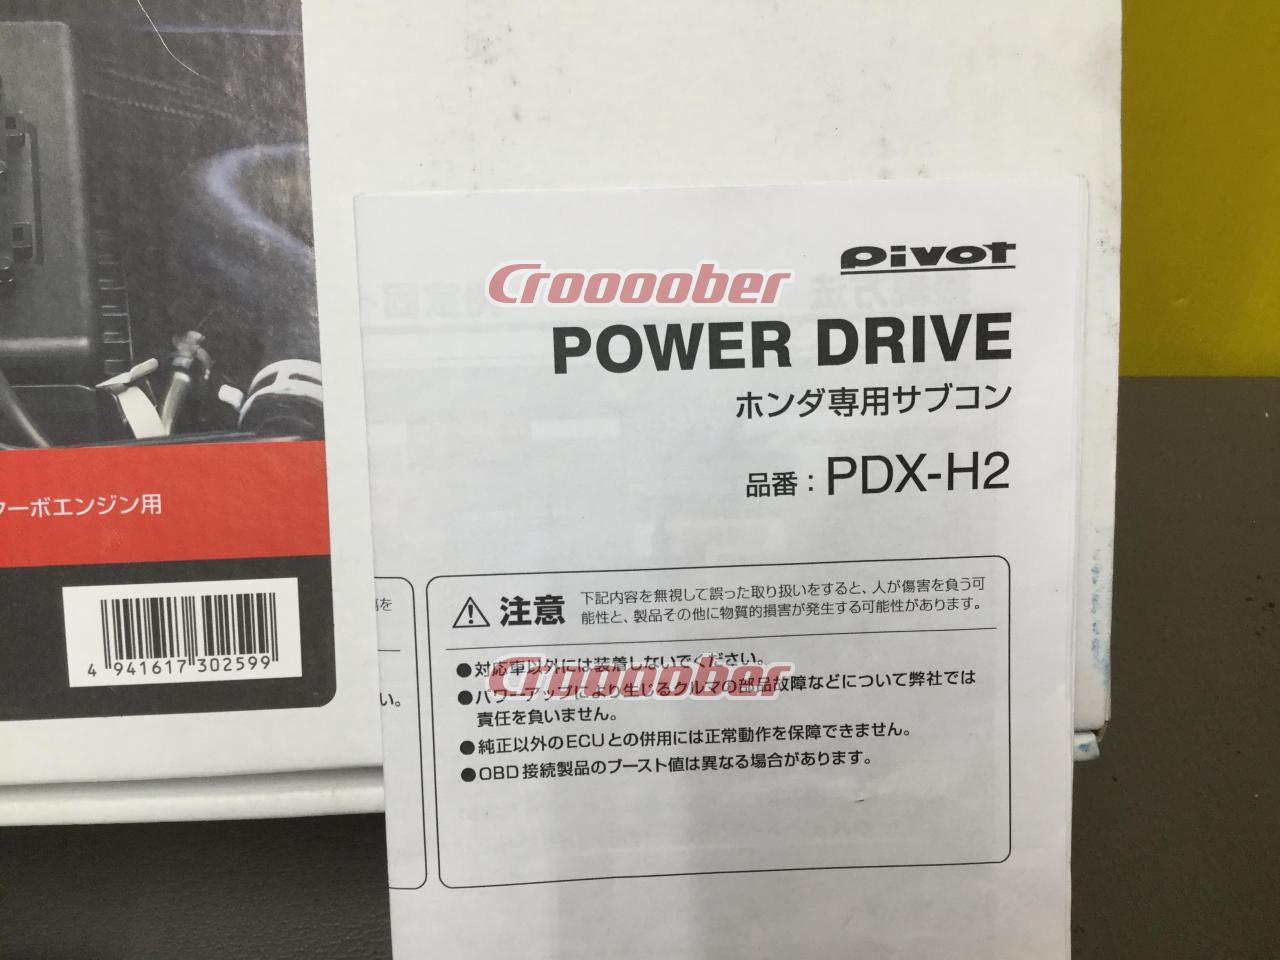 Pivot POWER DRIVE | Electronics Parts | Croooober